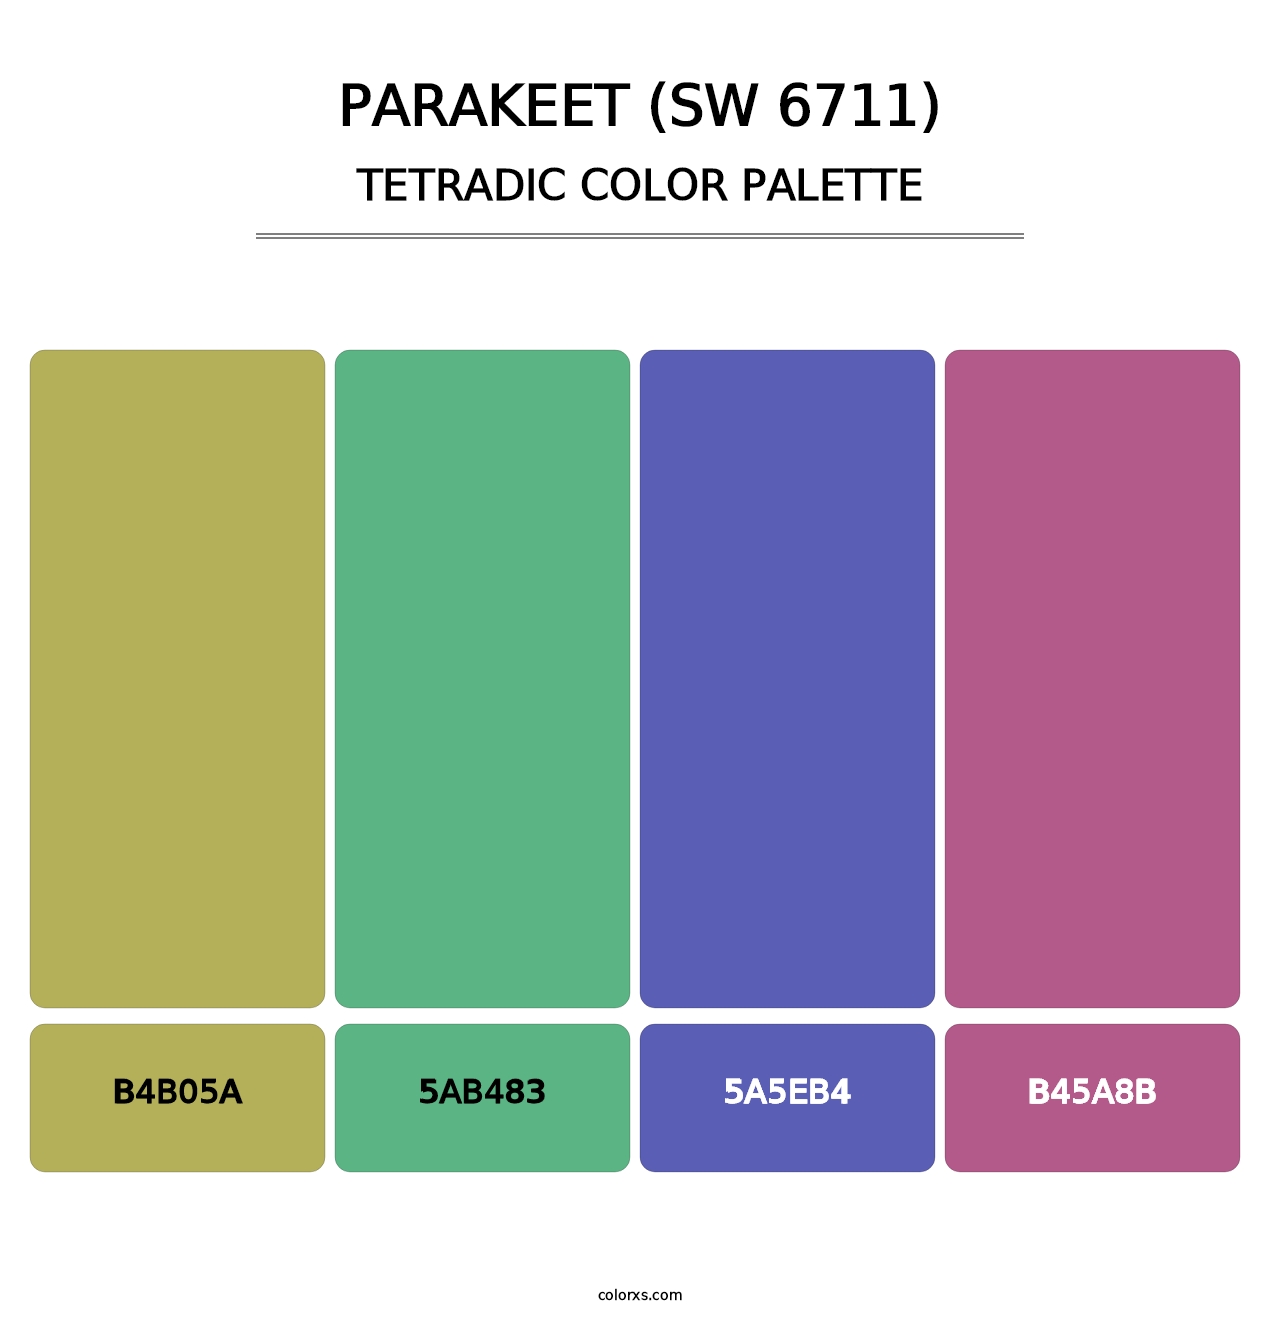 Parakeet (SW 6711) - Tetradic Color Palette